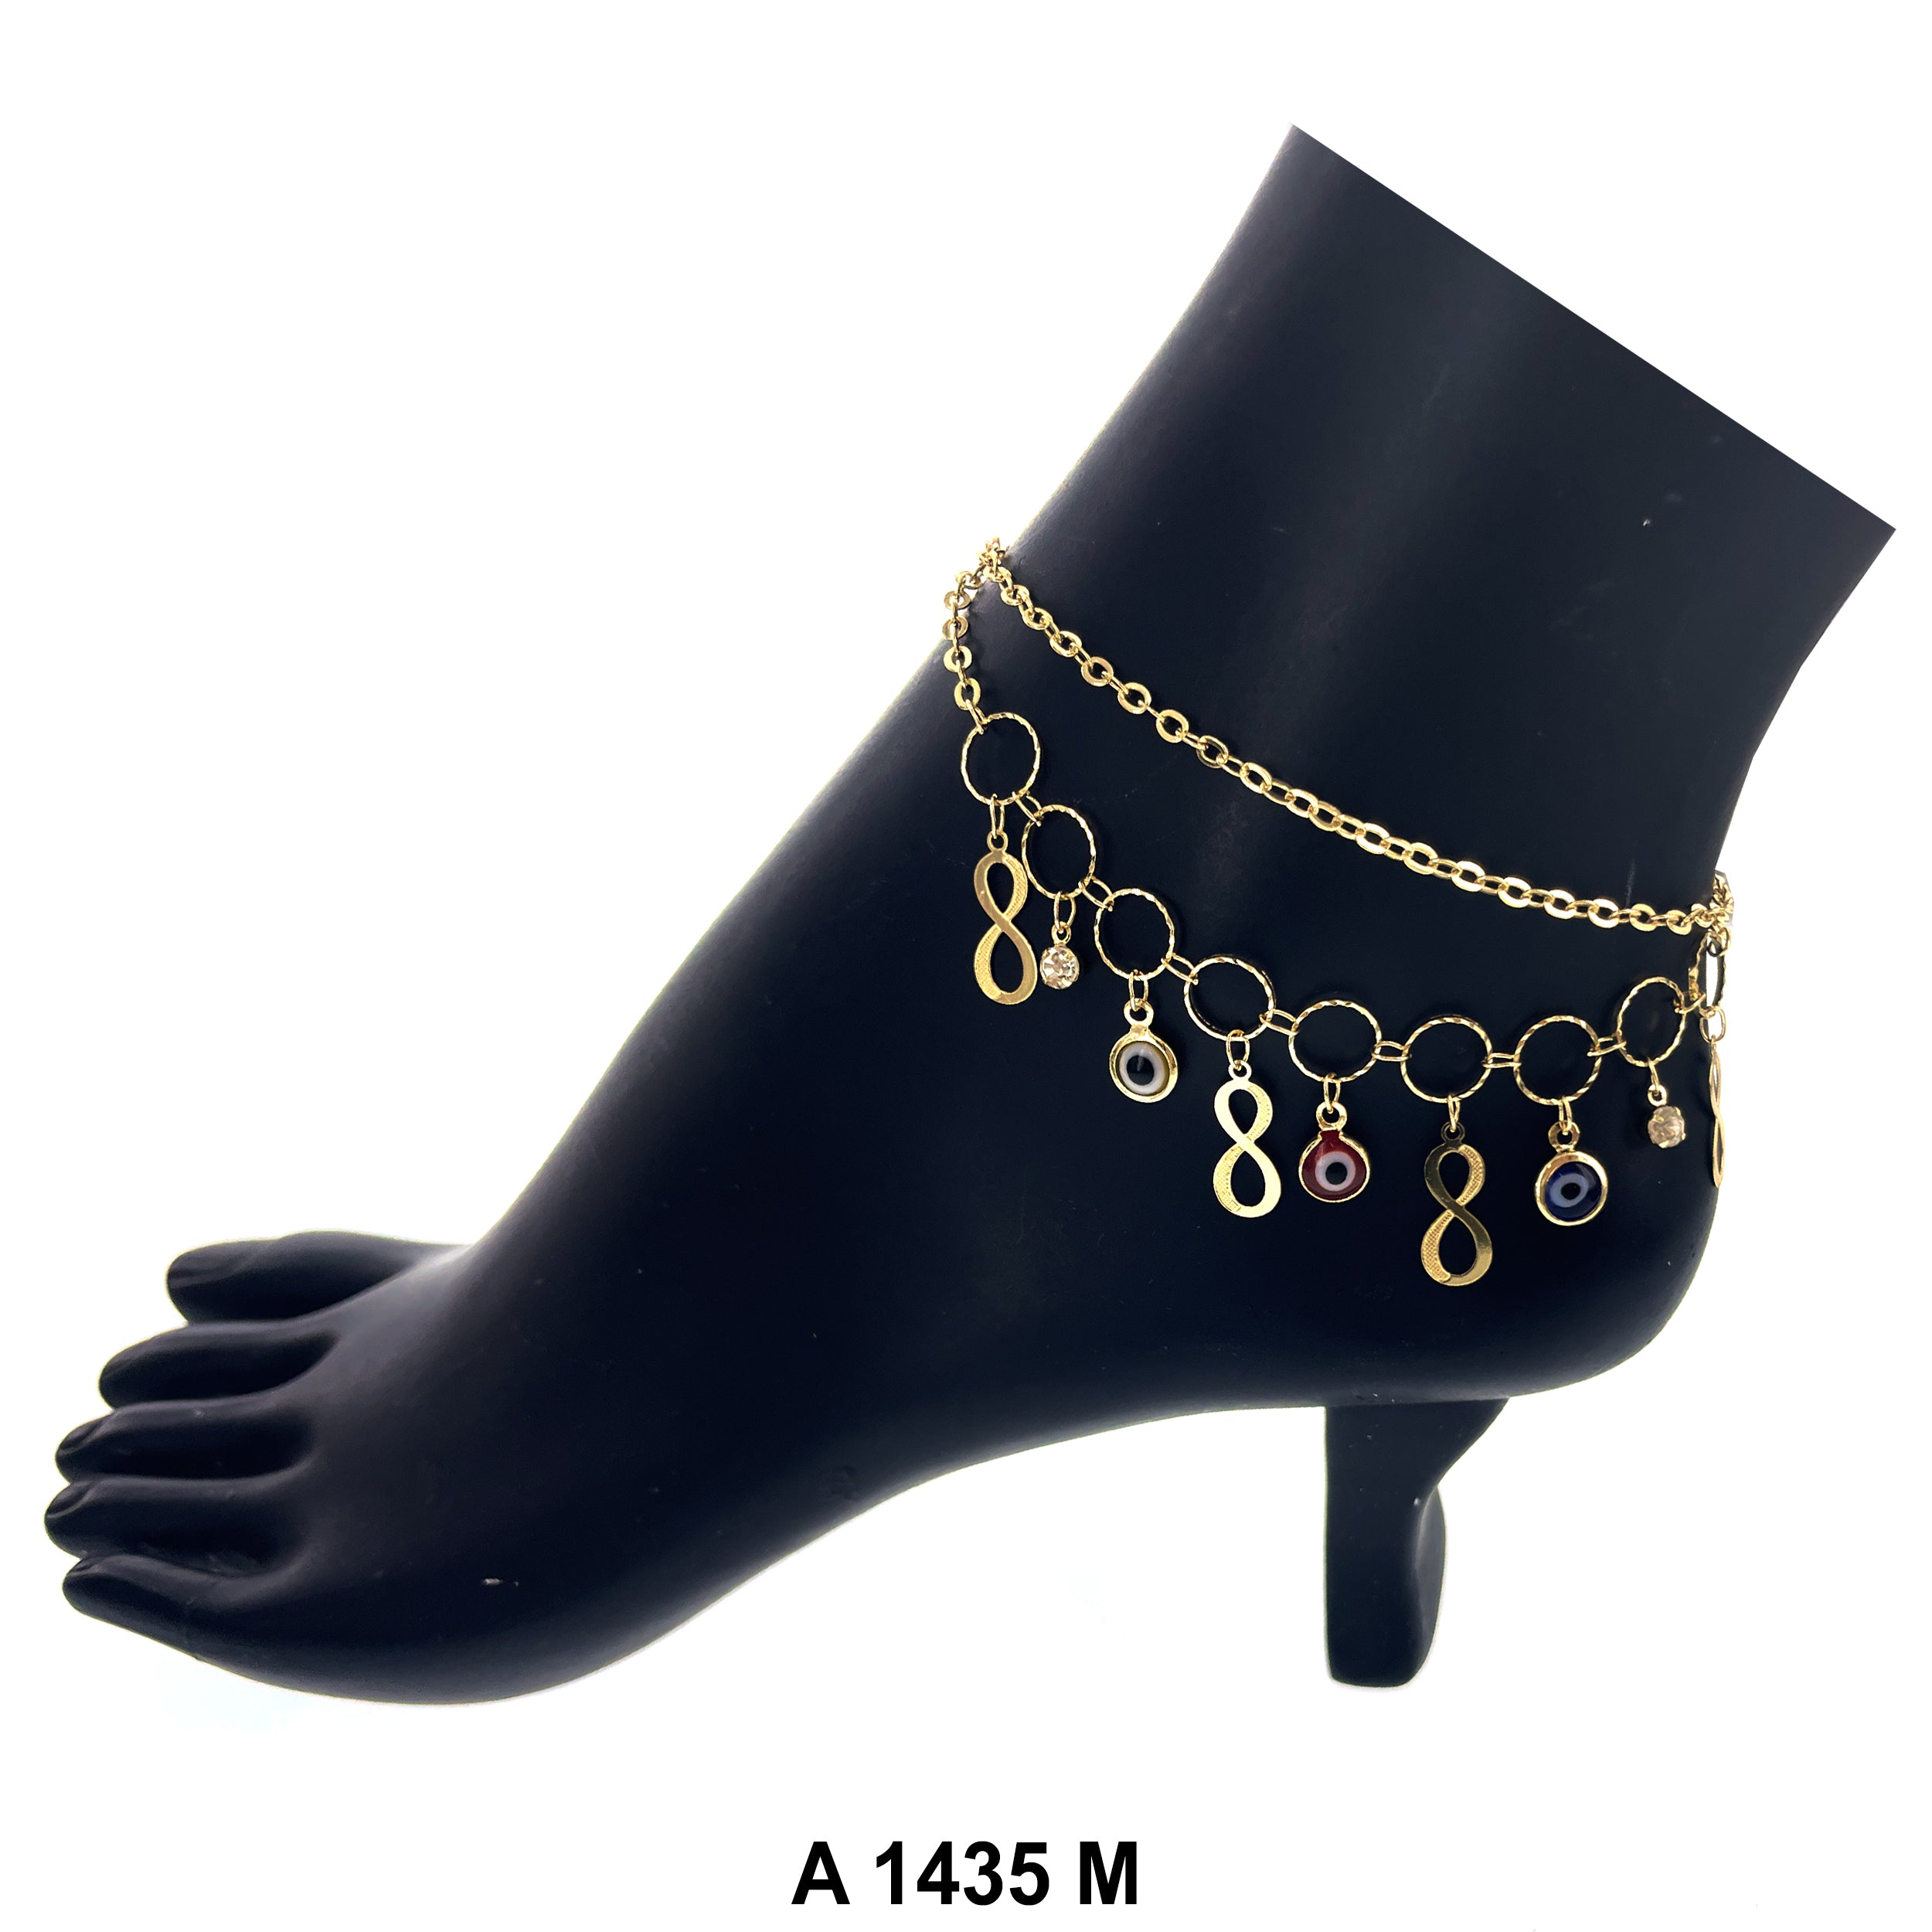 Fashion Anklets A 1435 M